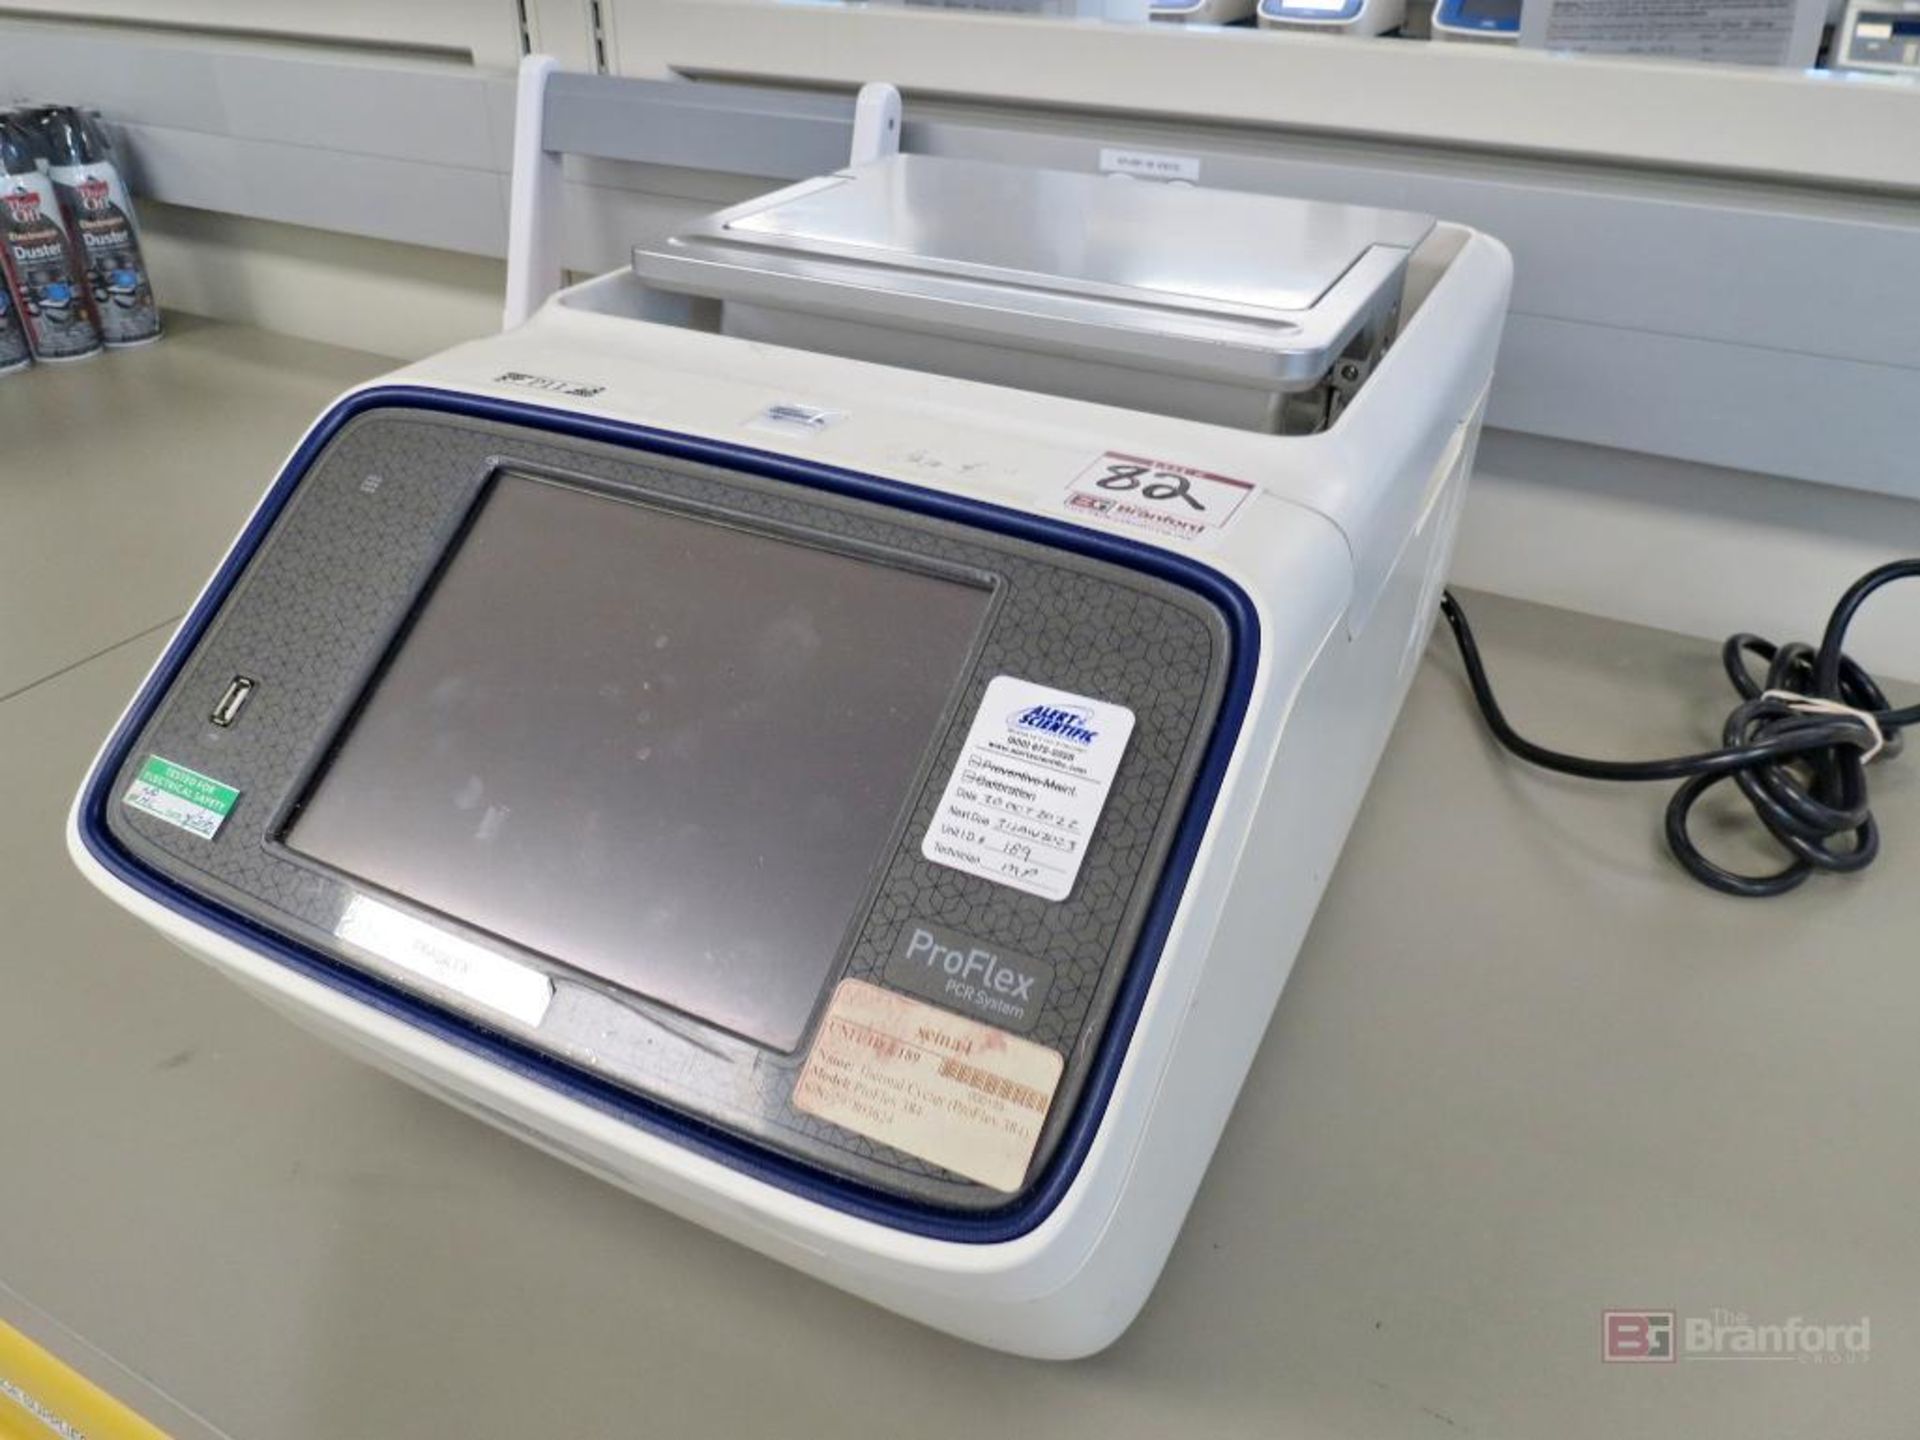 Applied Biosystems Life Technologies ProFlex PCR System